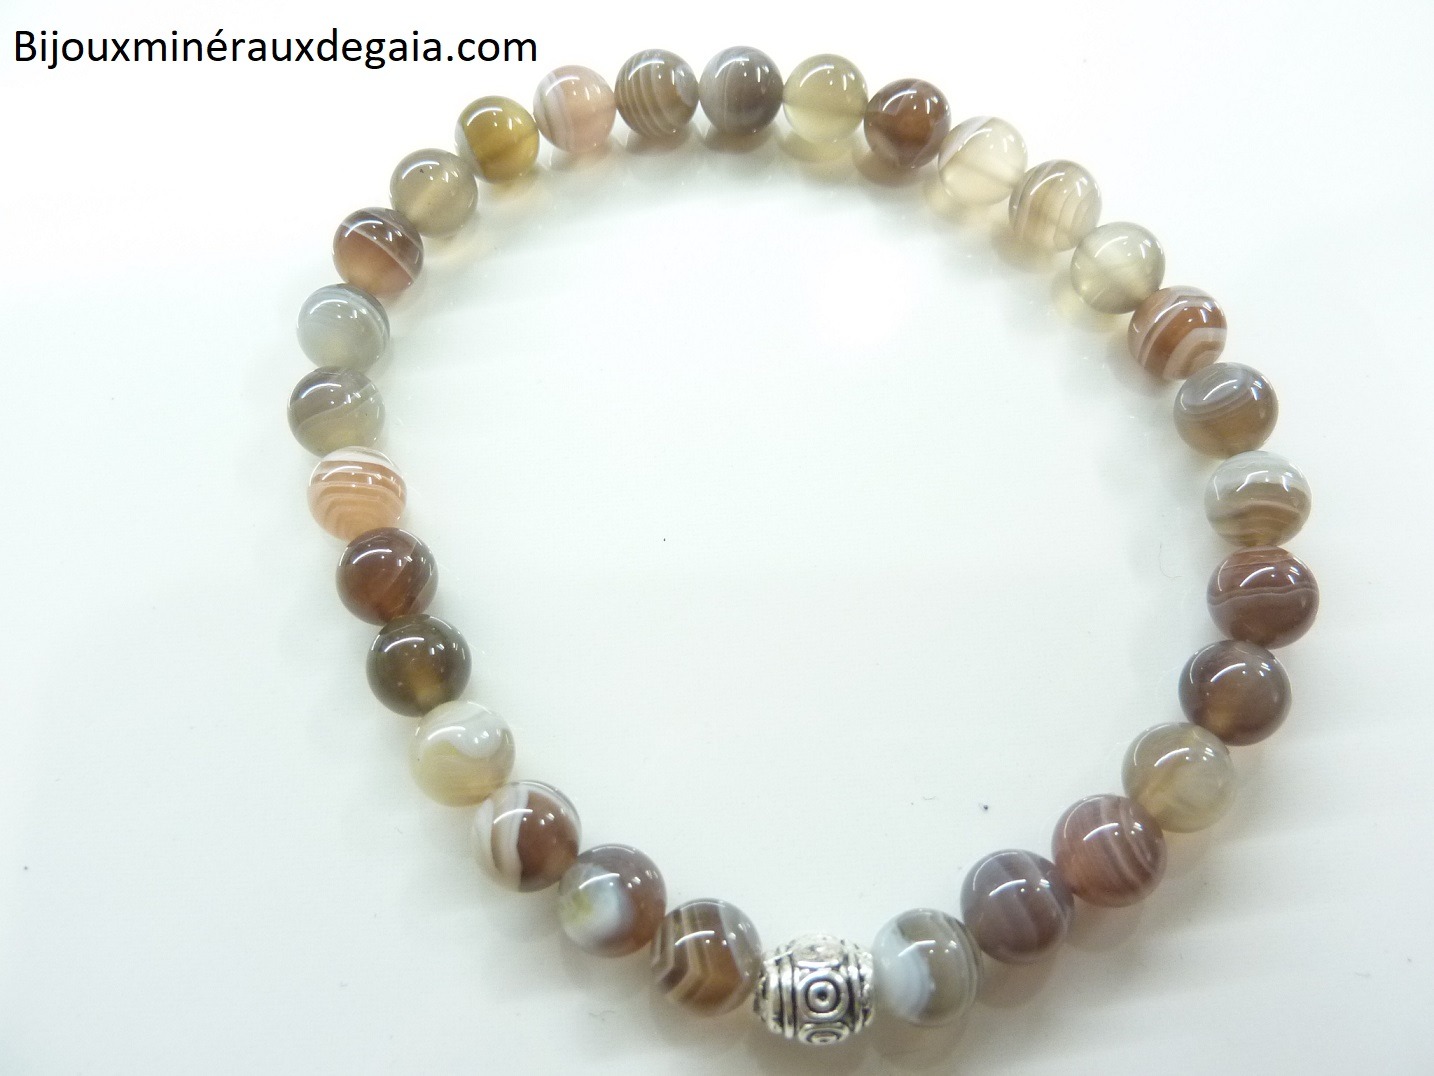 Bracelet agate botswana – Perles rondes 6 mm